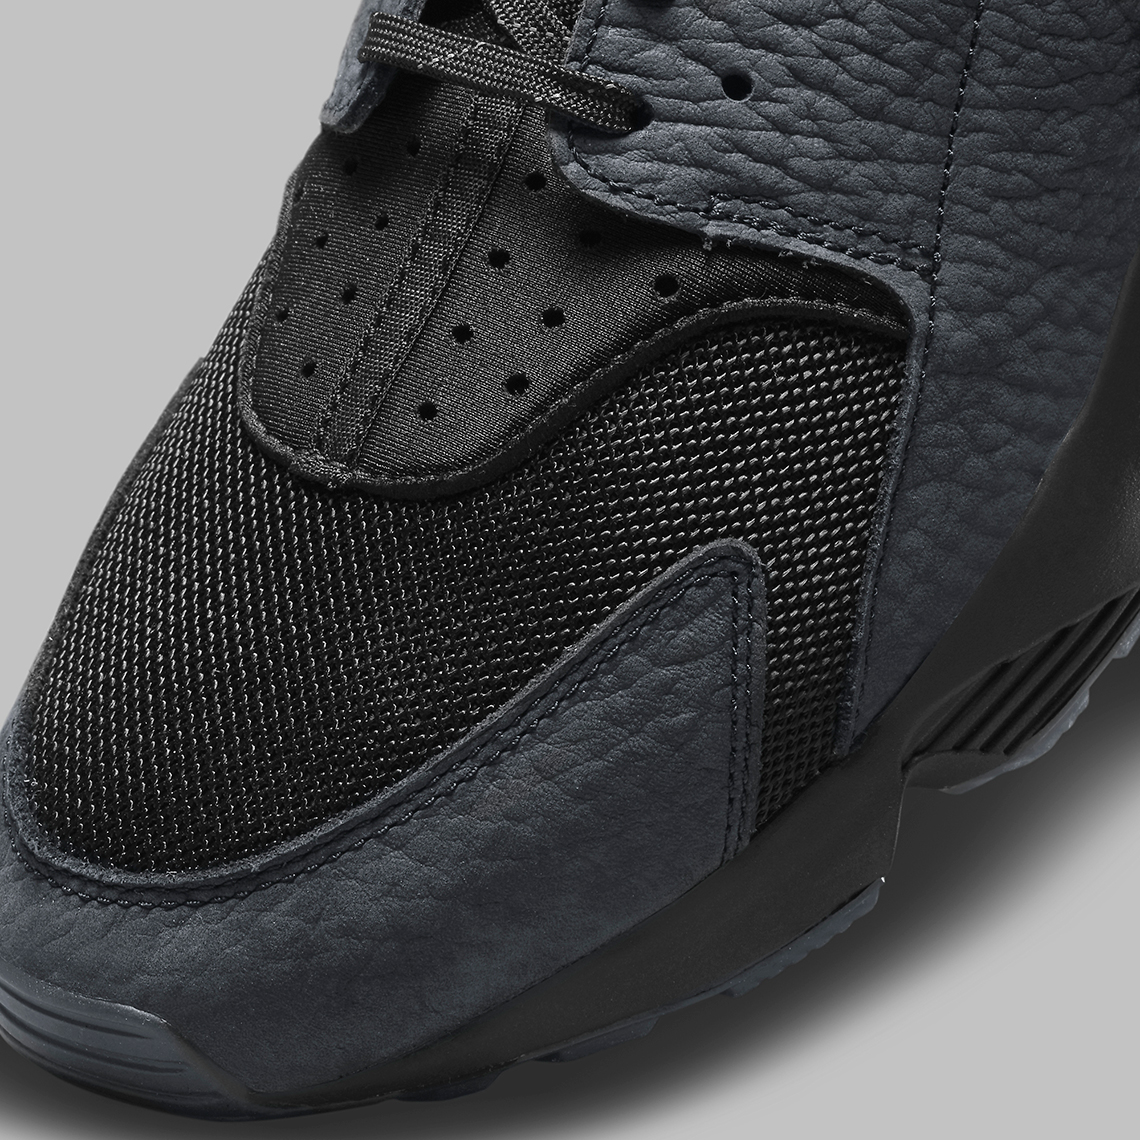 Nike Air Huarache Black Tumbled Leather | SneakerNews.com